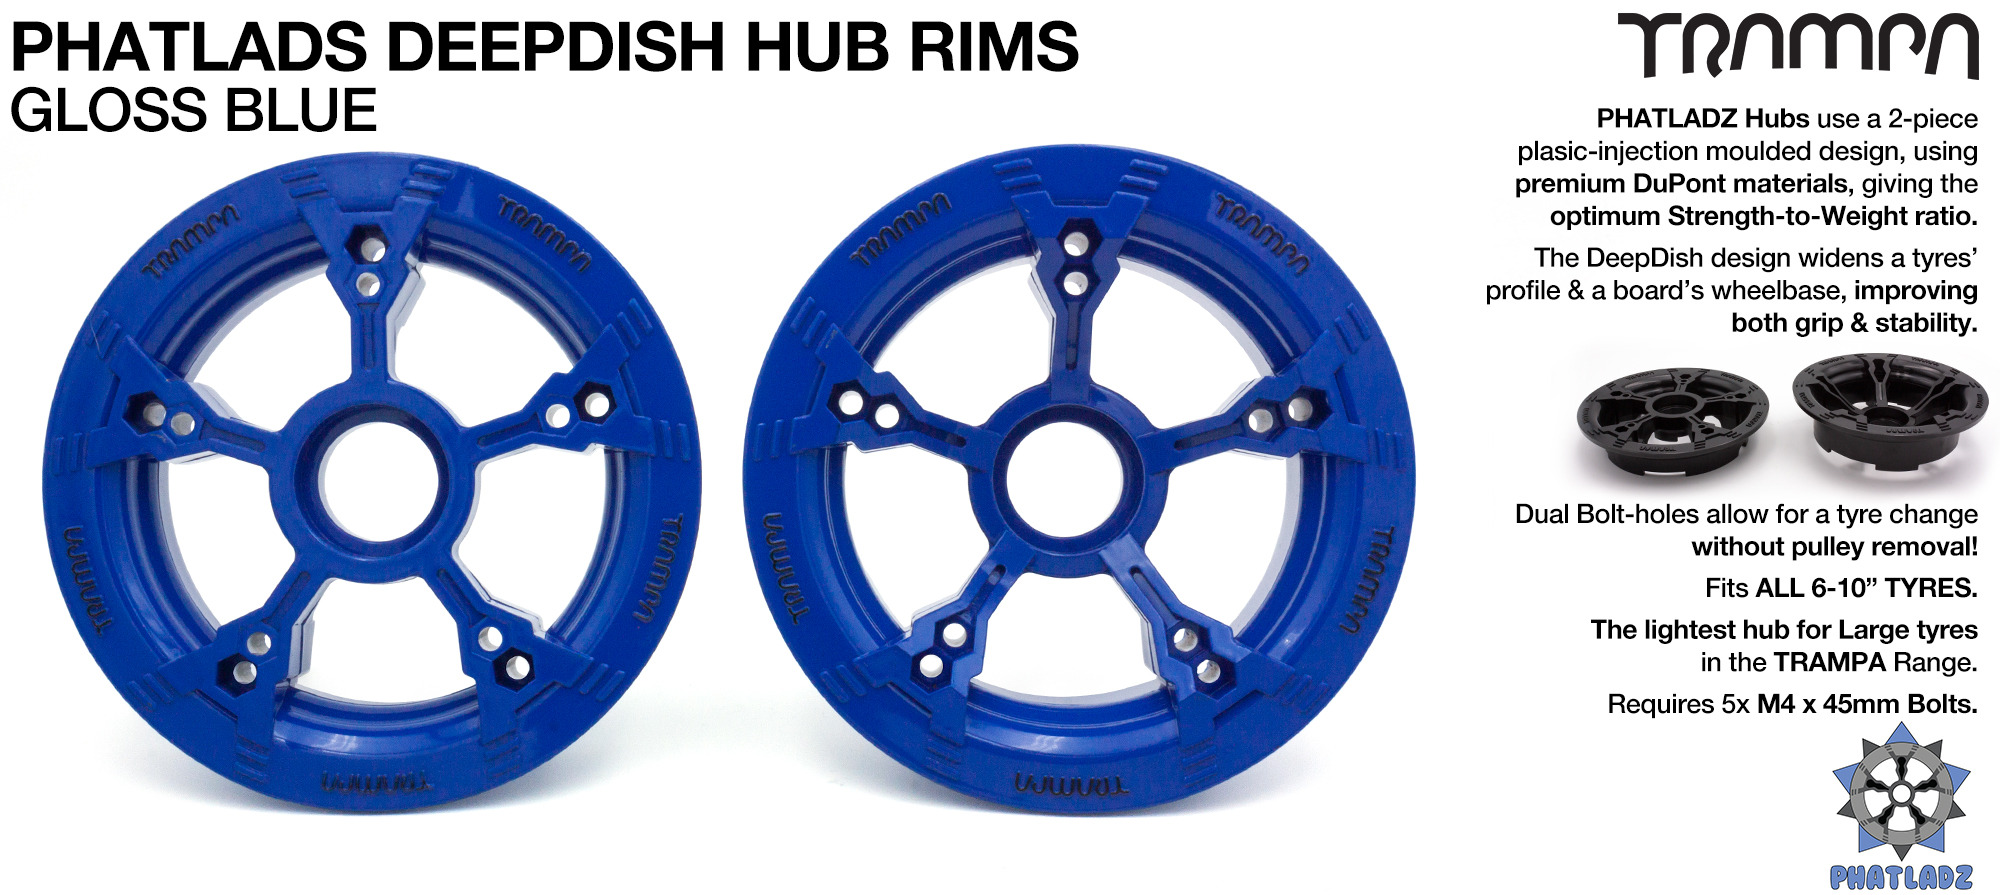 PHATLADS - 5 Spoke Hub Deep Dish Split Rim hub natural BLUE with Black Logo fits 6,7,8,9 & 10 Inch tyres!! Amazing - NO BOLTS